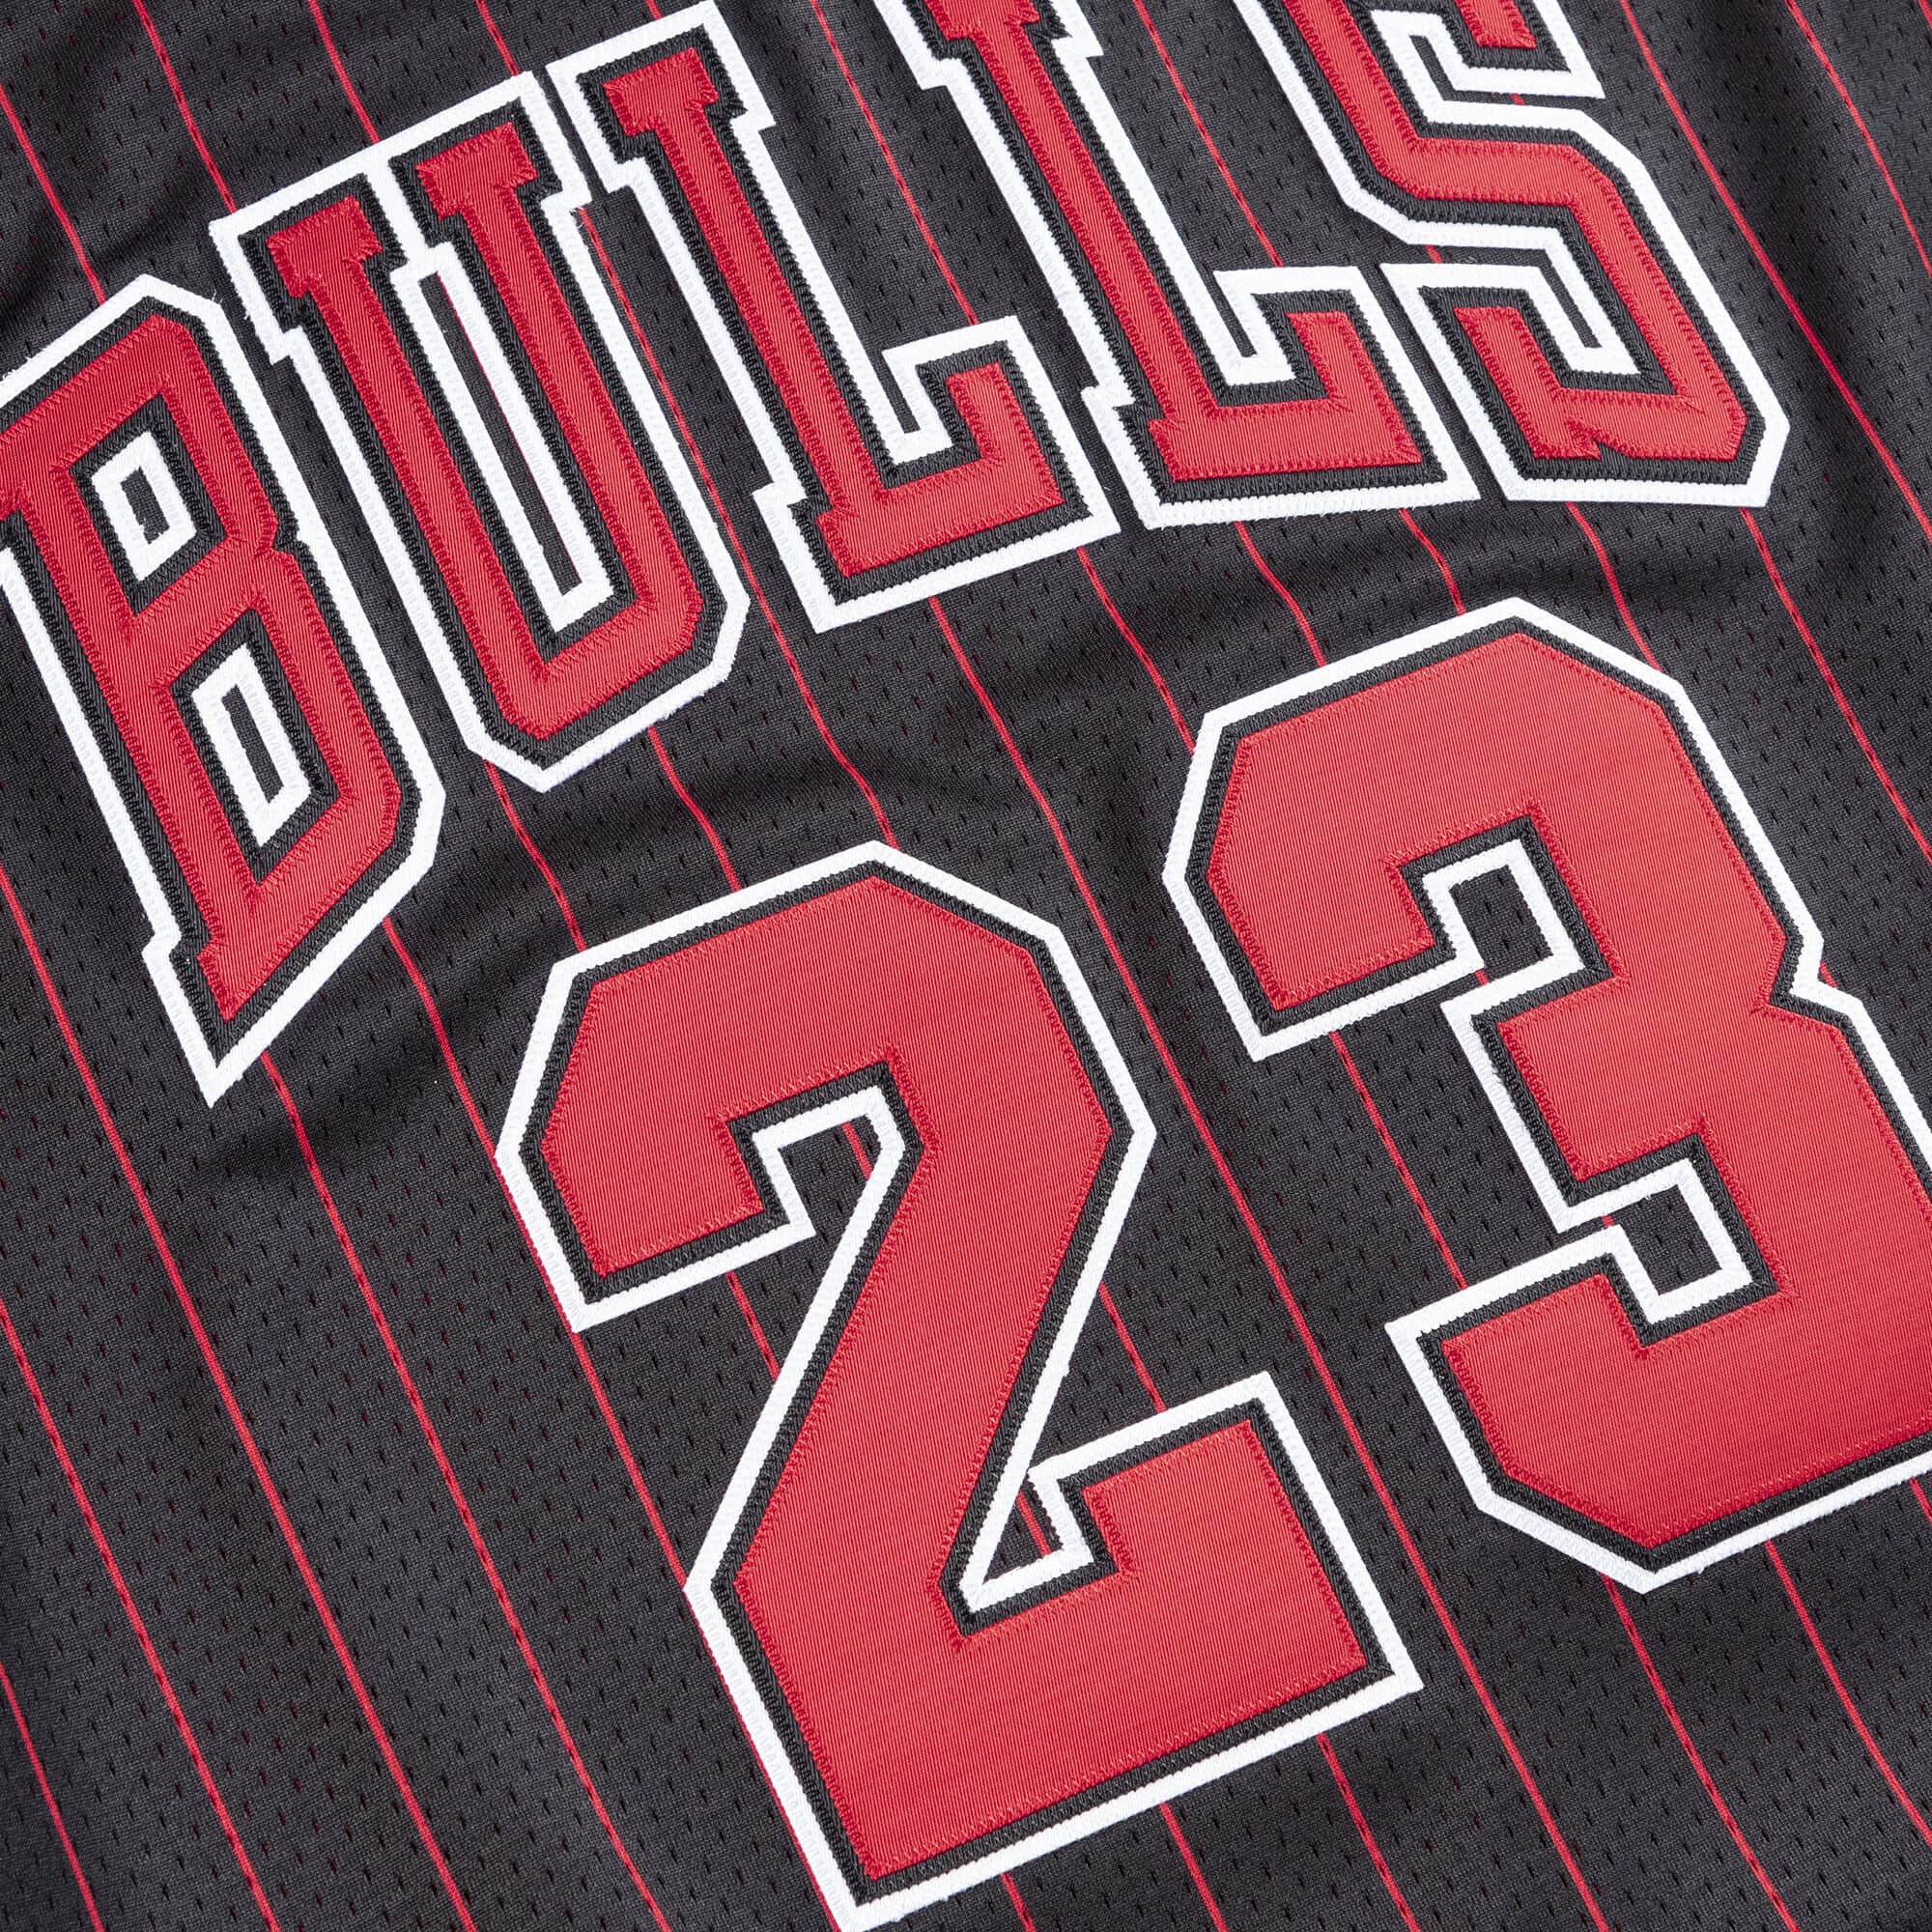 Michael Jordan Chicago Bulls Jersey Pin by SAYIDOWjpg